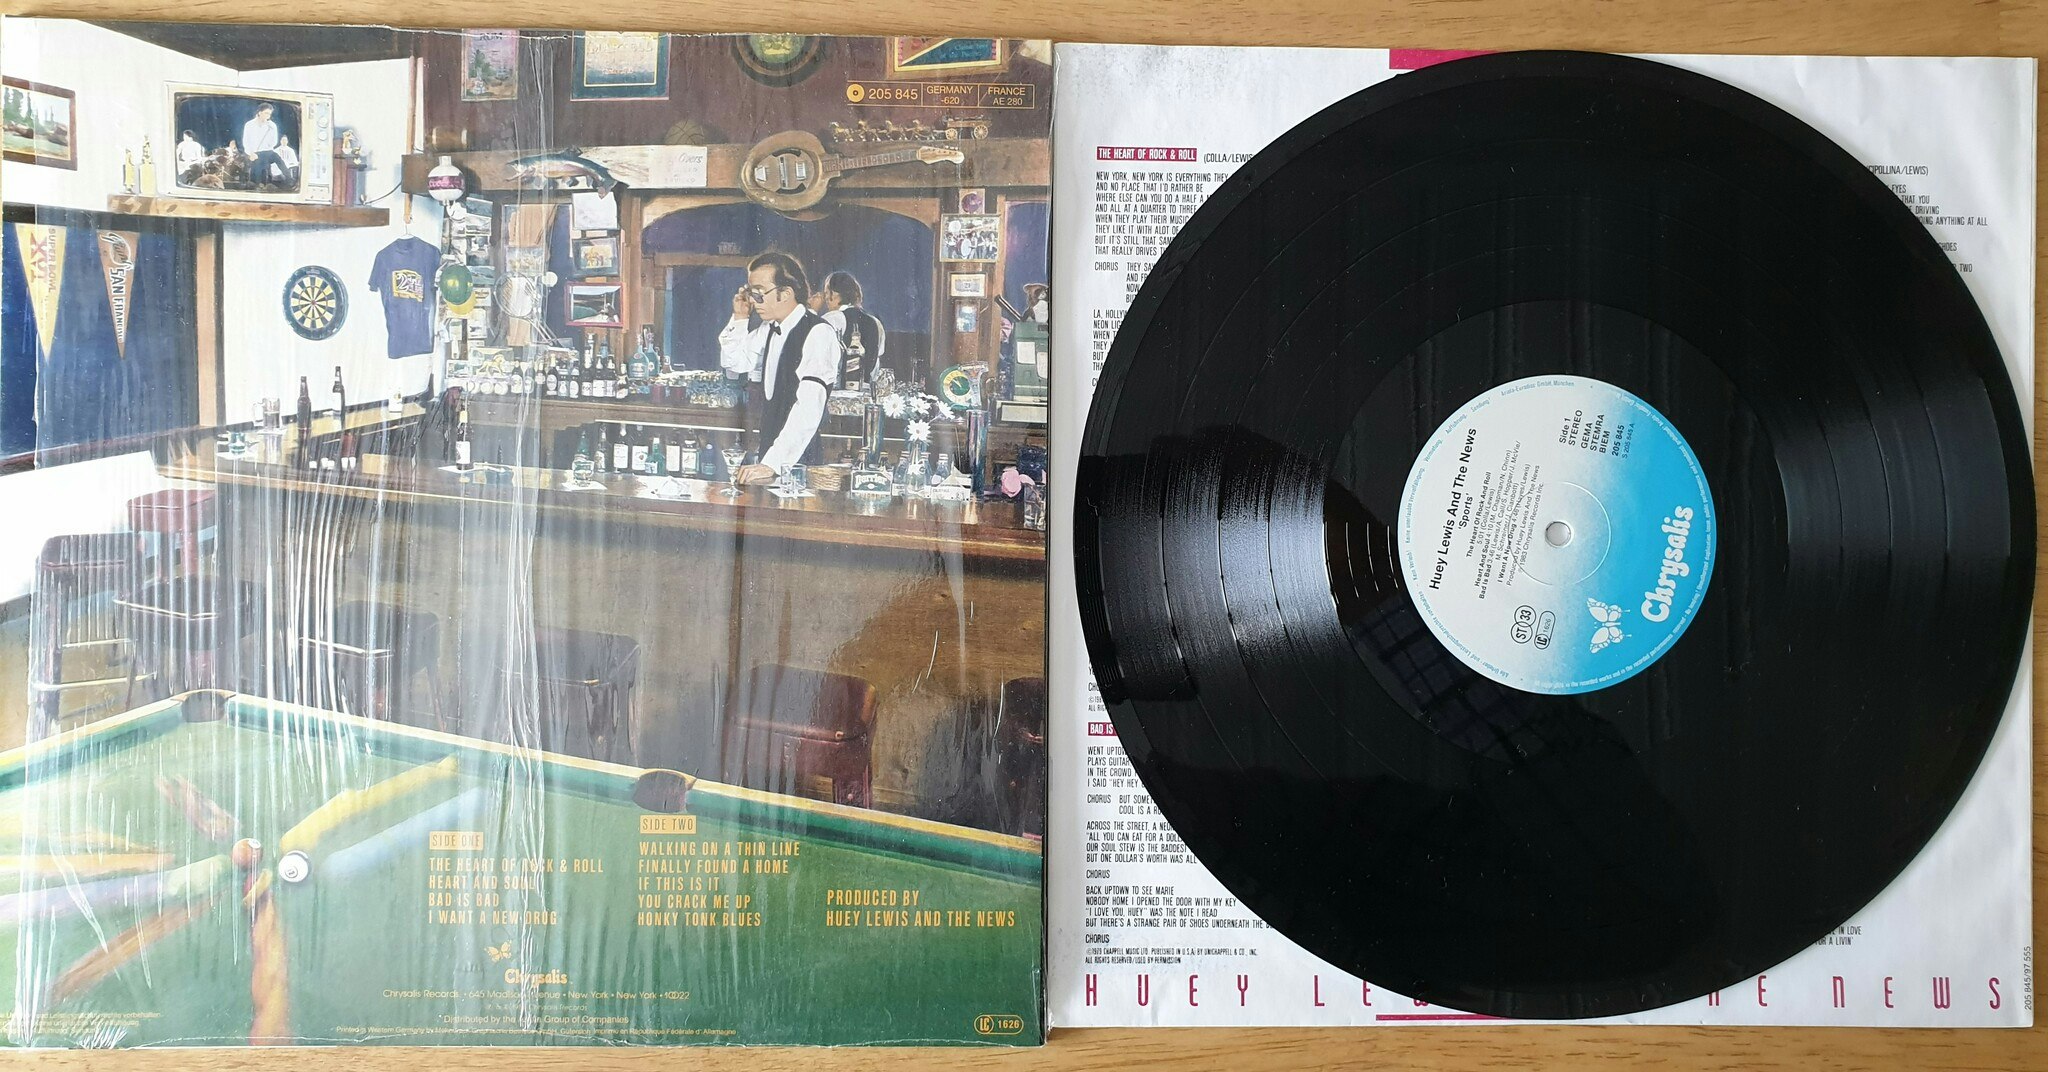 Huey Lewis and the News, Sports car. Vinyl LP